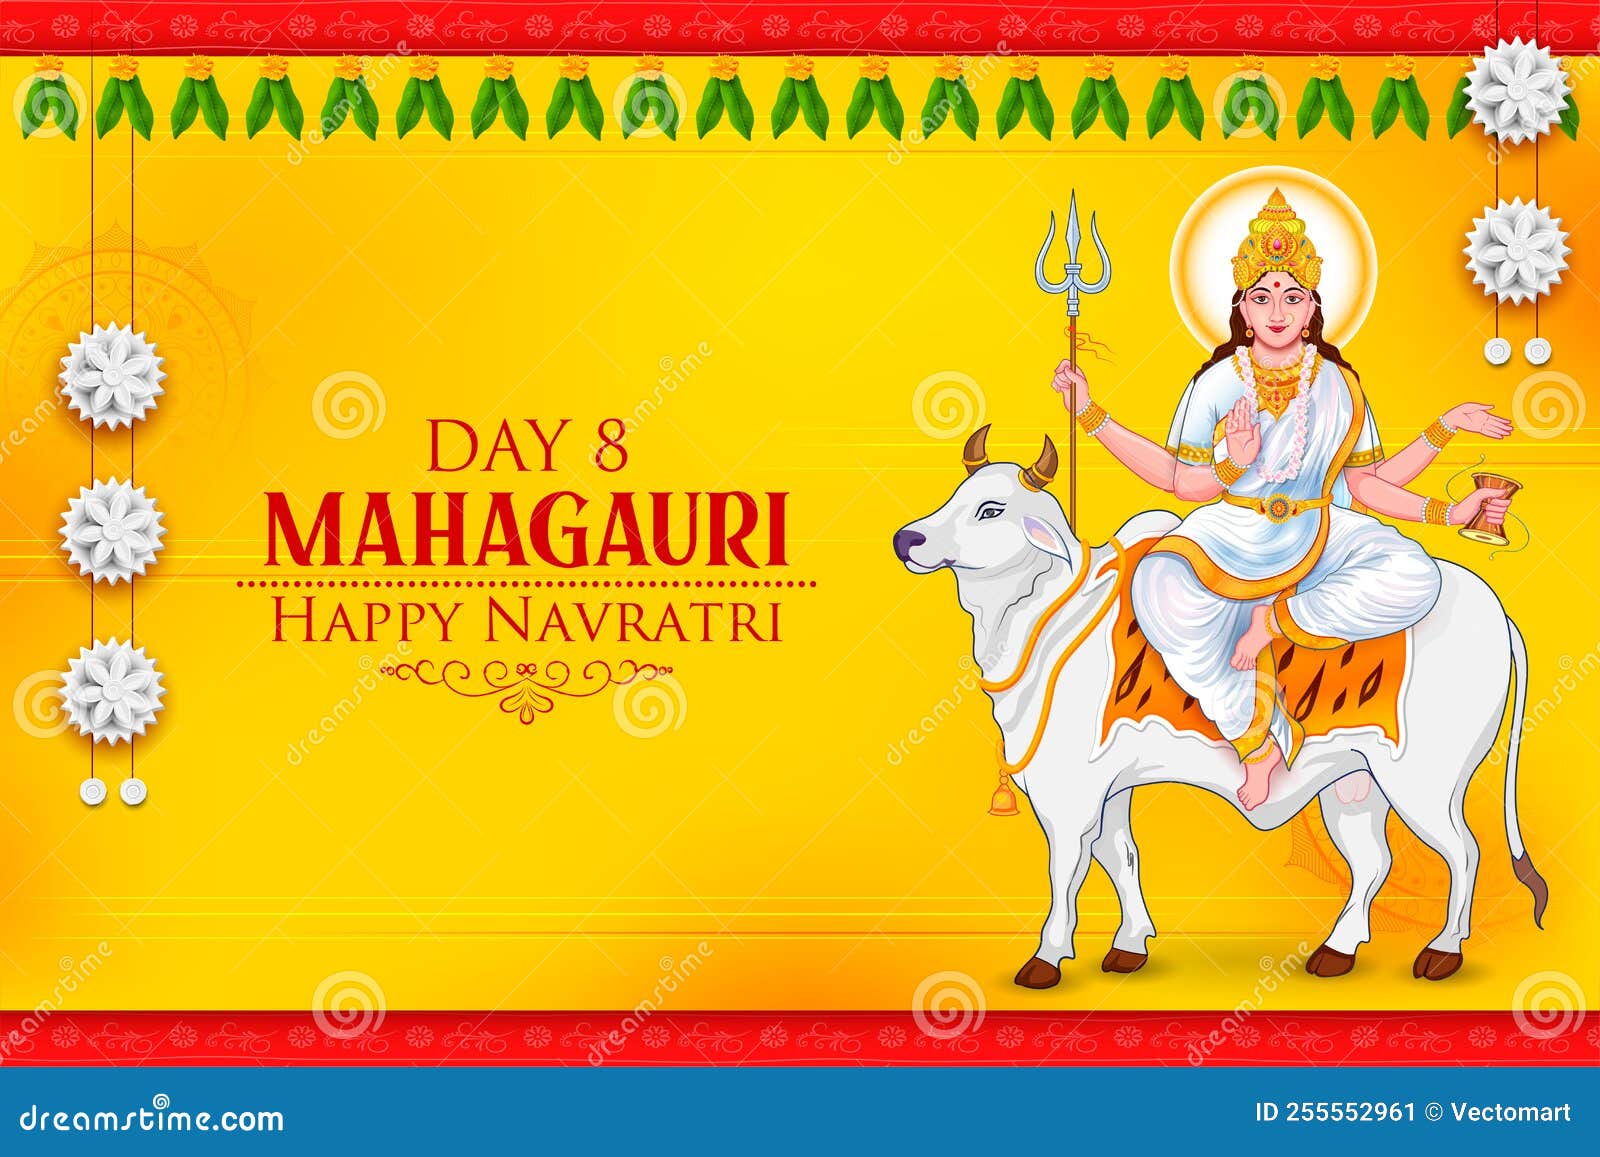 Goddess Mahagauri Devi for the Eighth Navadurga of Navratri ...